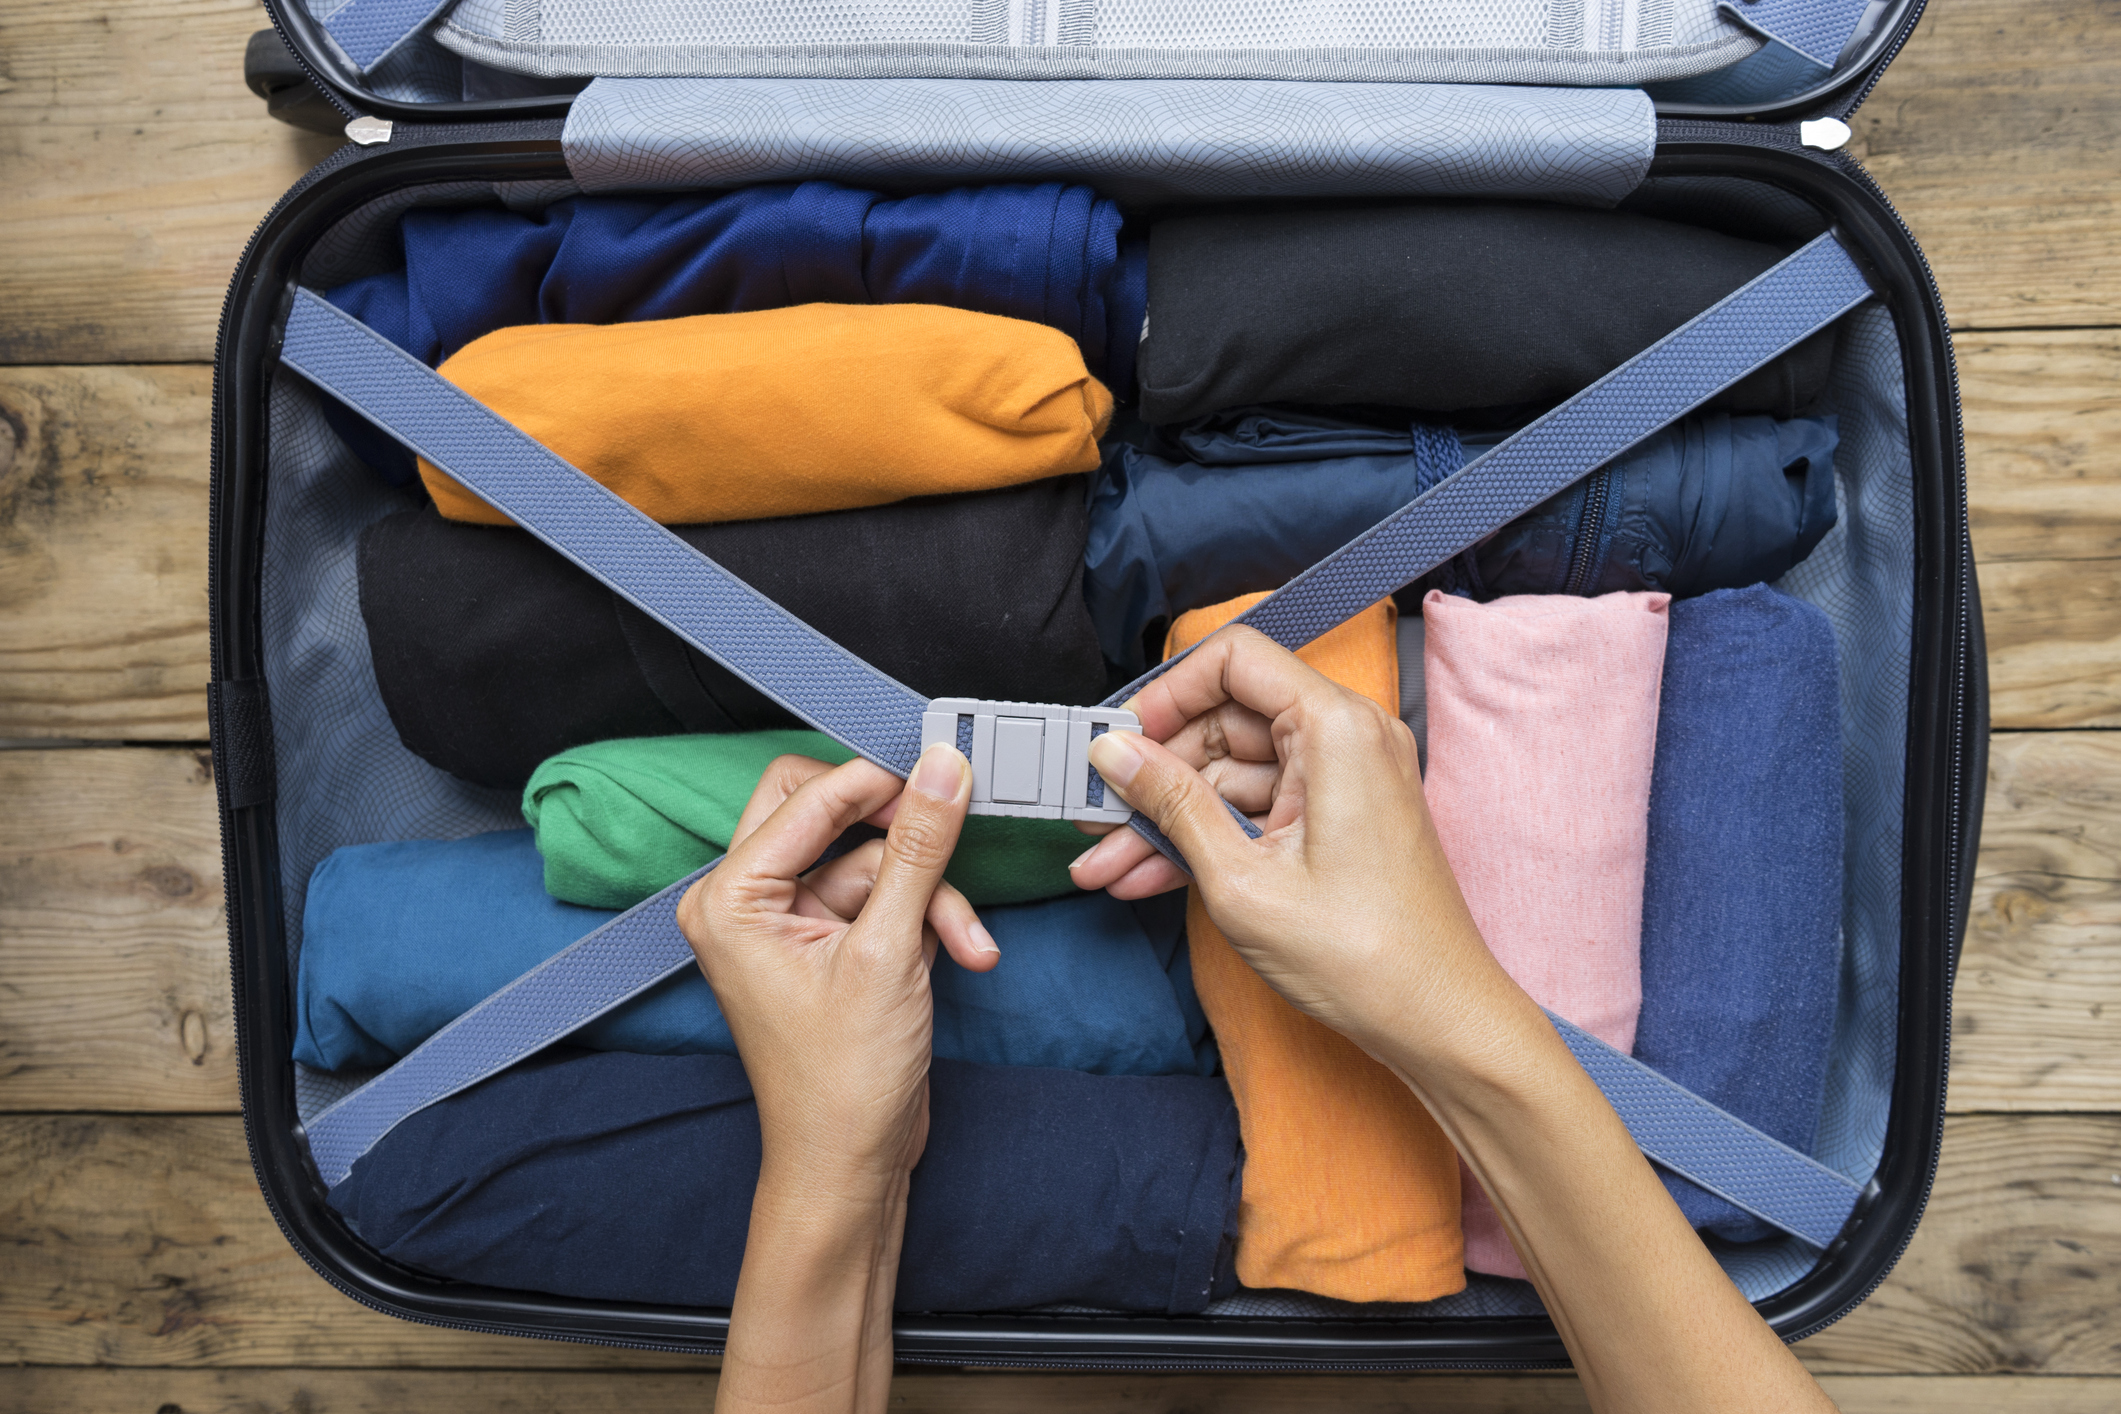 Enrolar as roupas economiza espaço na mala